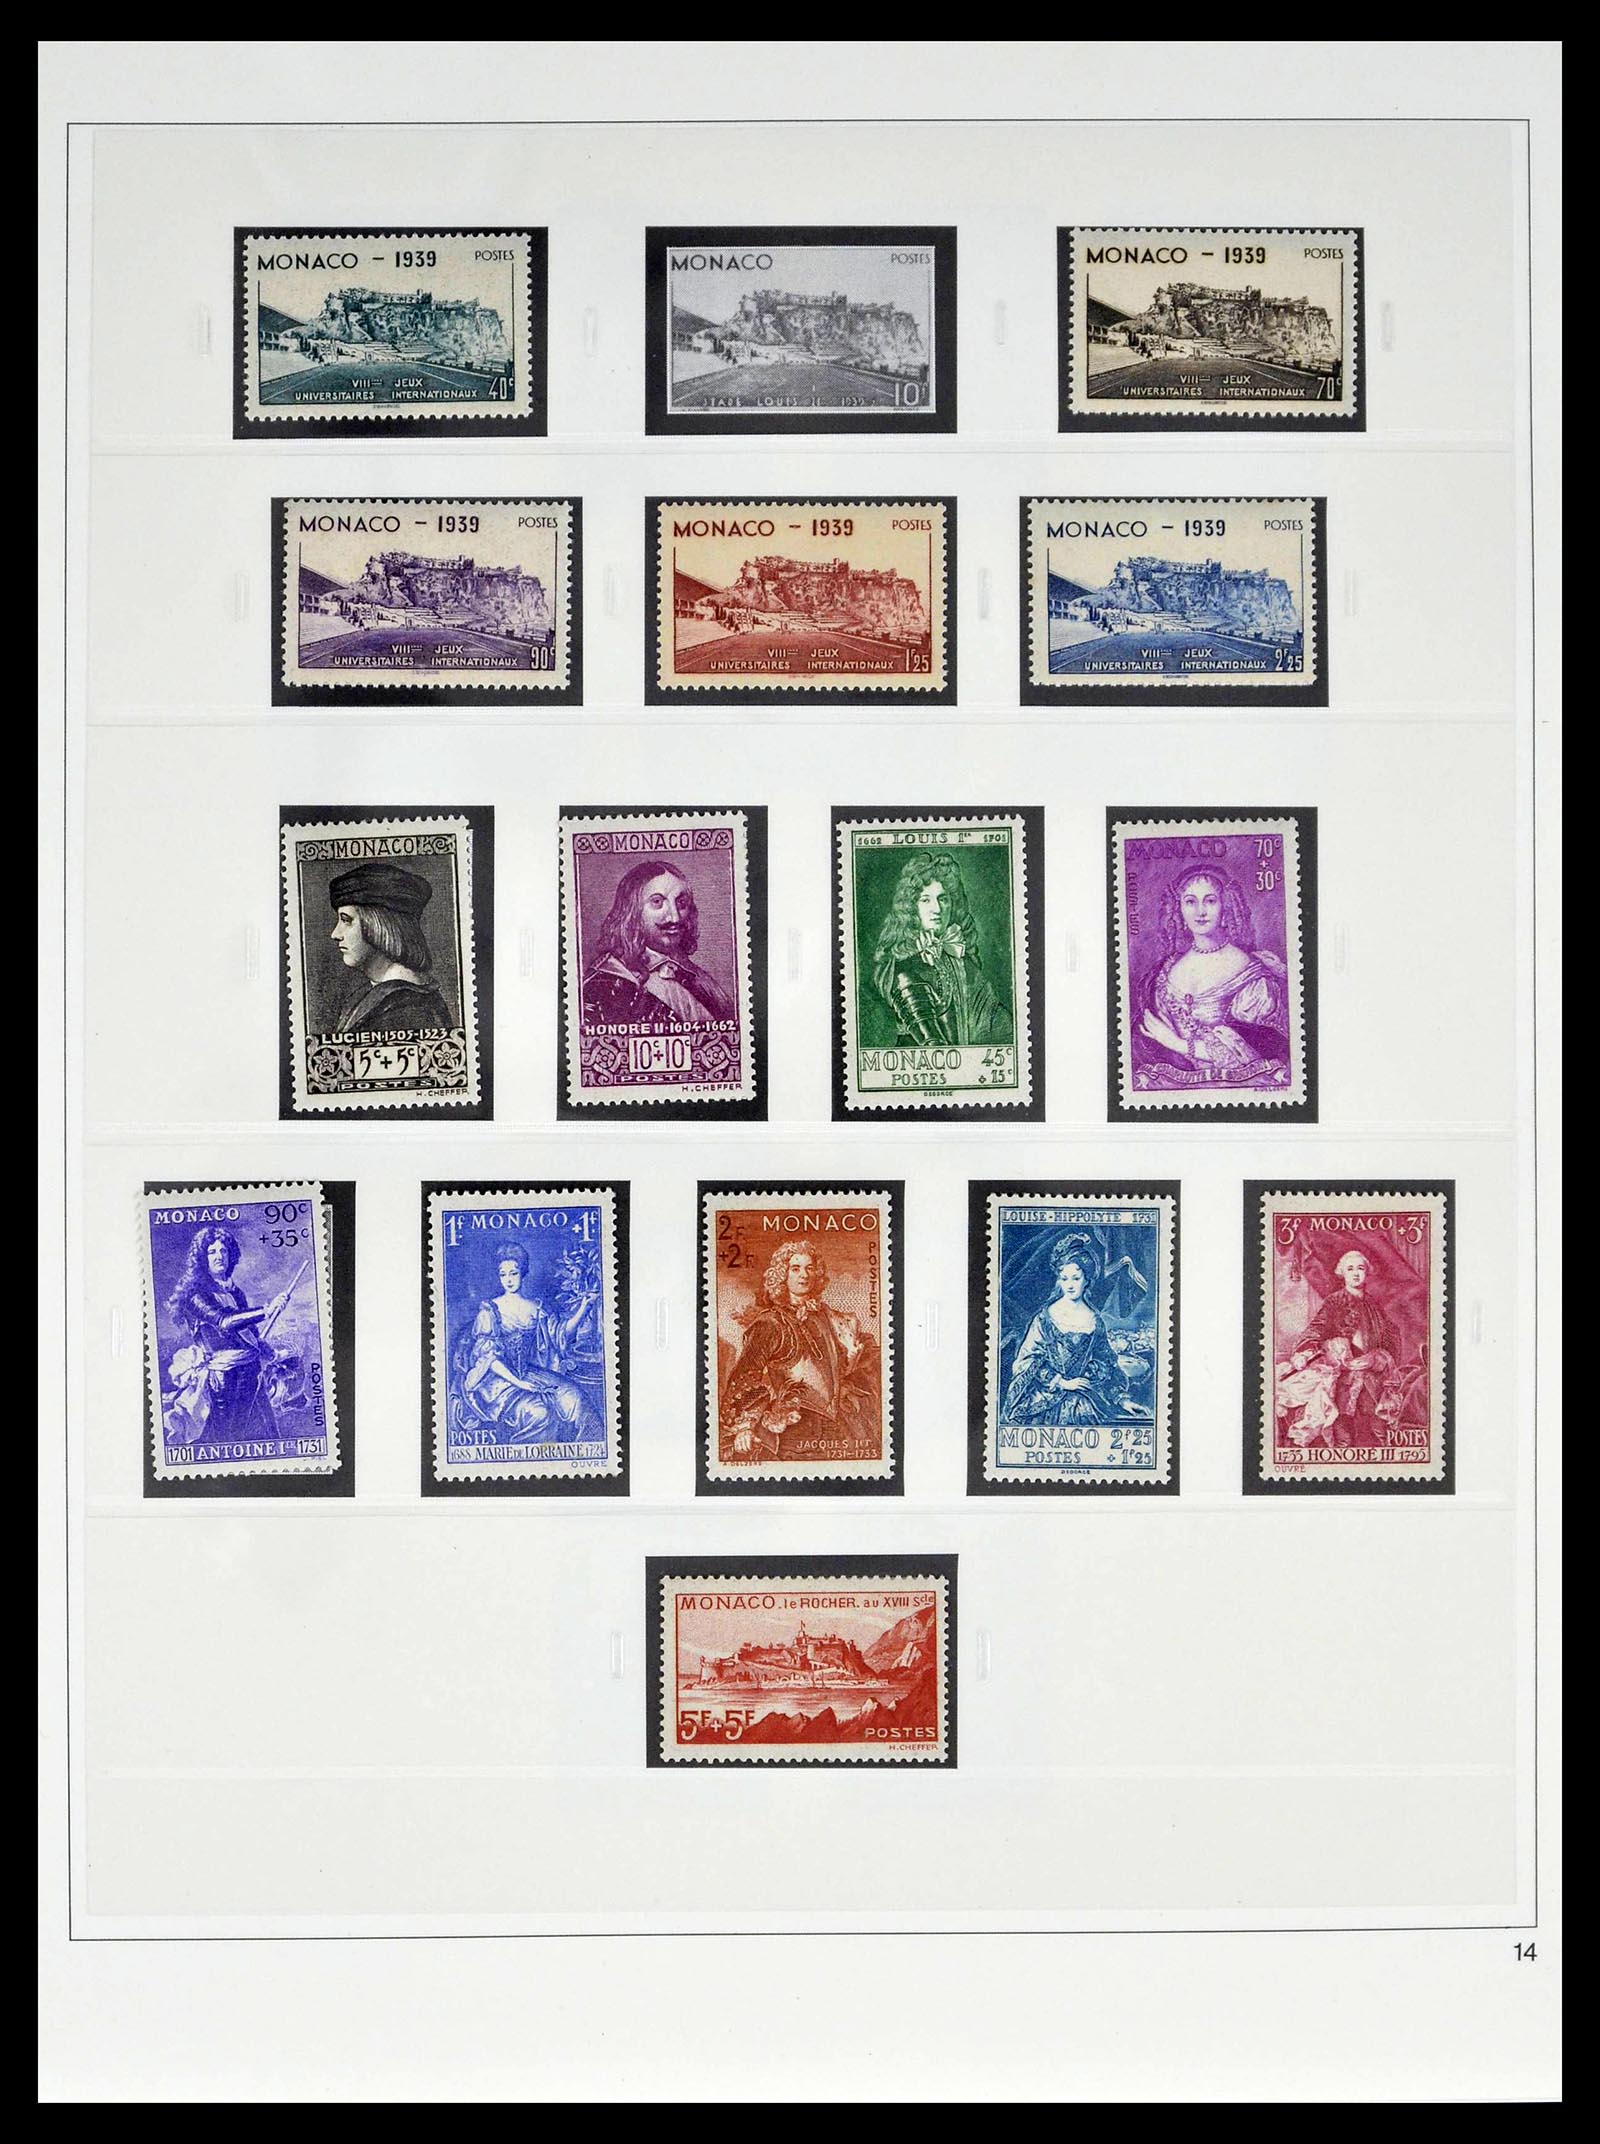 39211 0013 - Stamp collection 39211 Monaco 1885-1983.